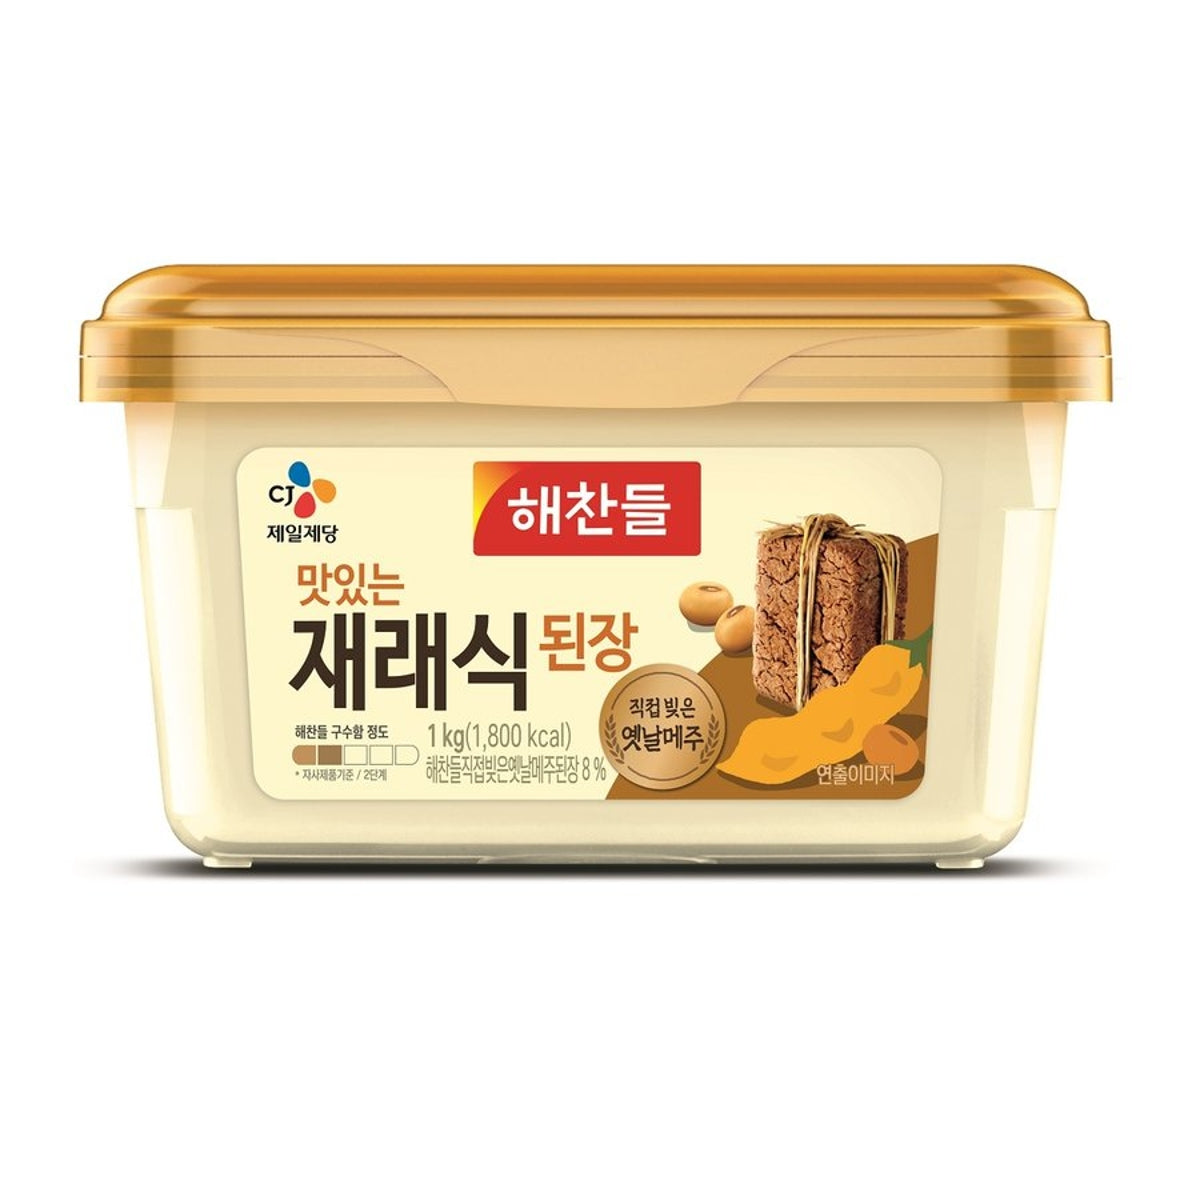 Cj Doenjang Soy Bean Paste 1kg